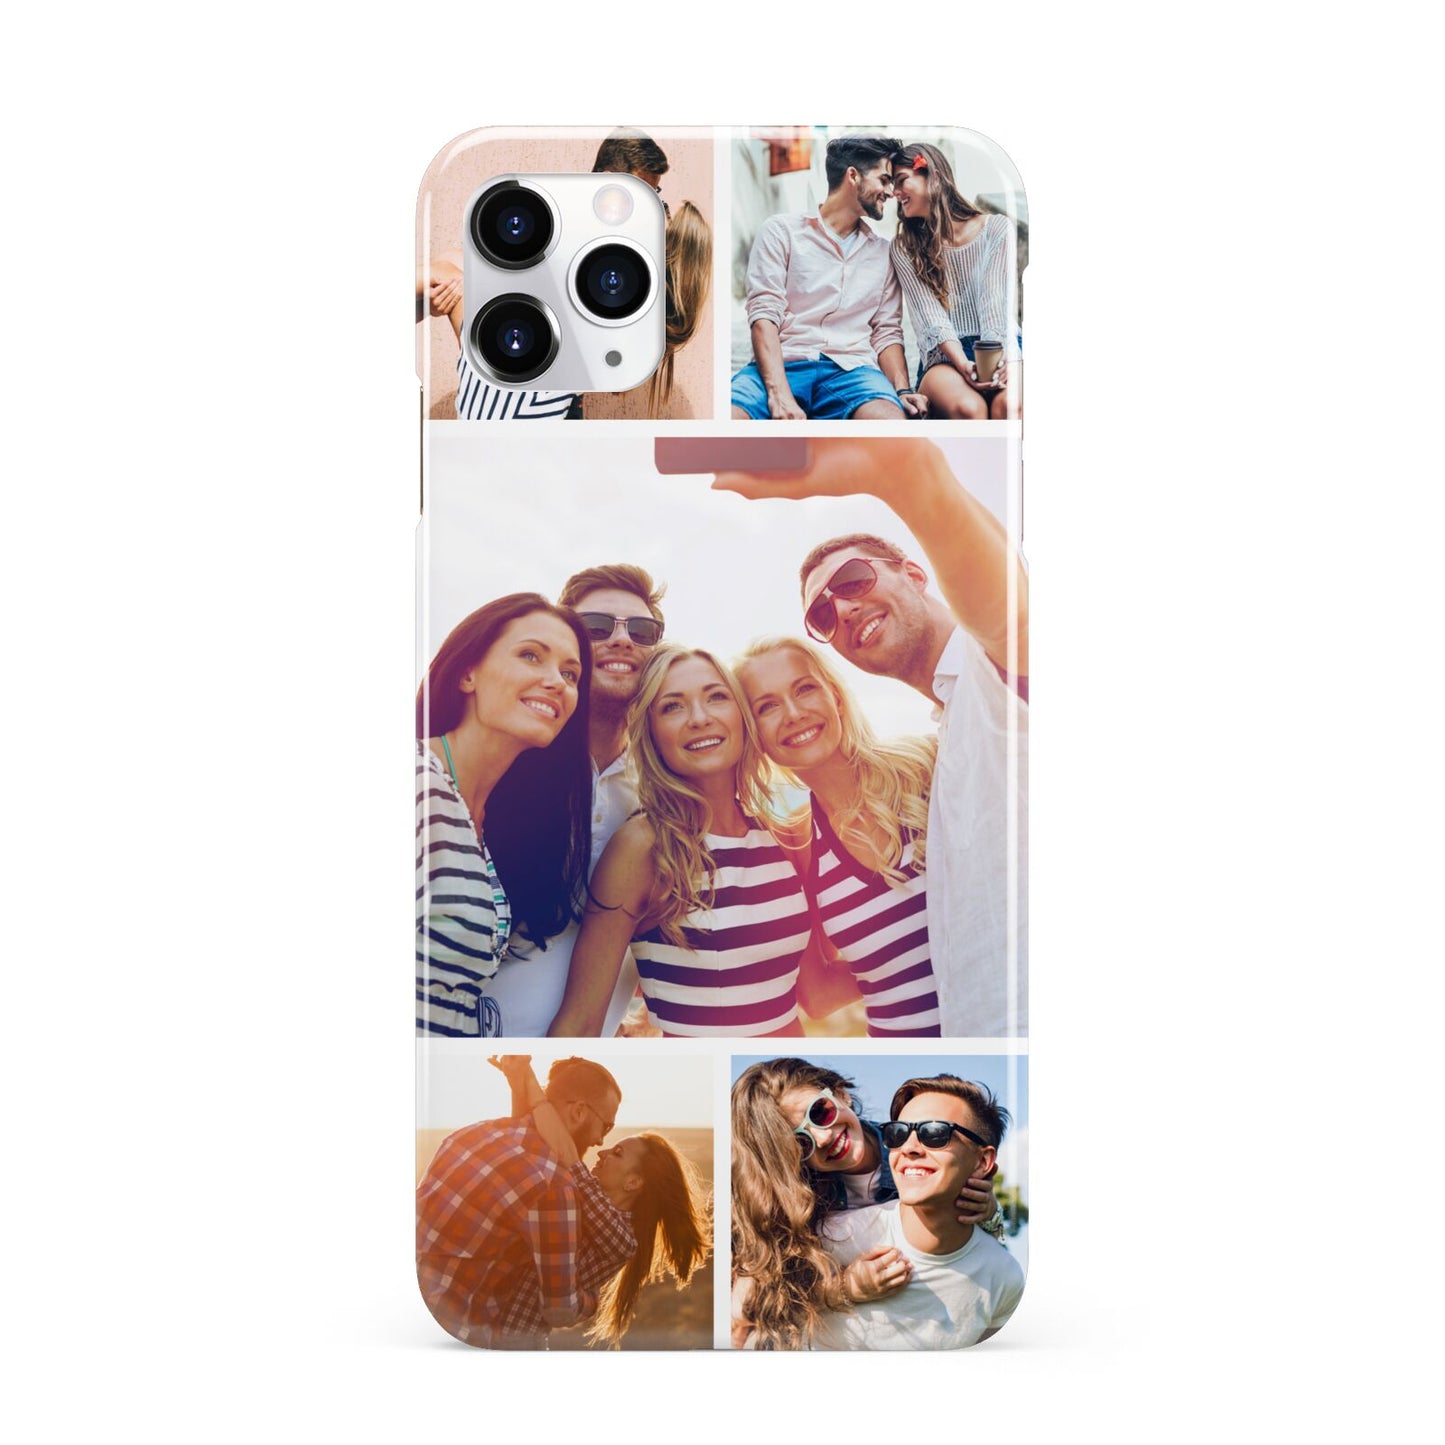 Tile Photo Collage Upload iPhone 11 Pro Max 3D Snap Case